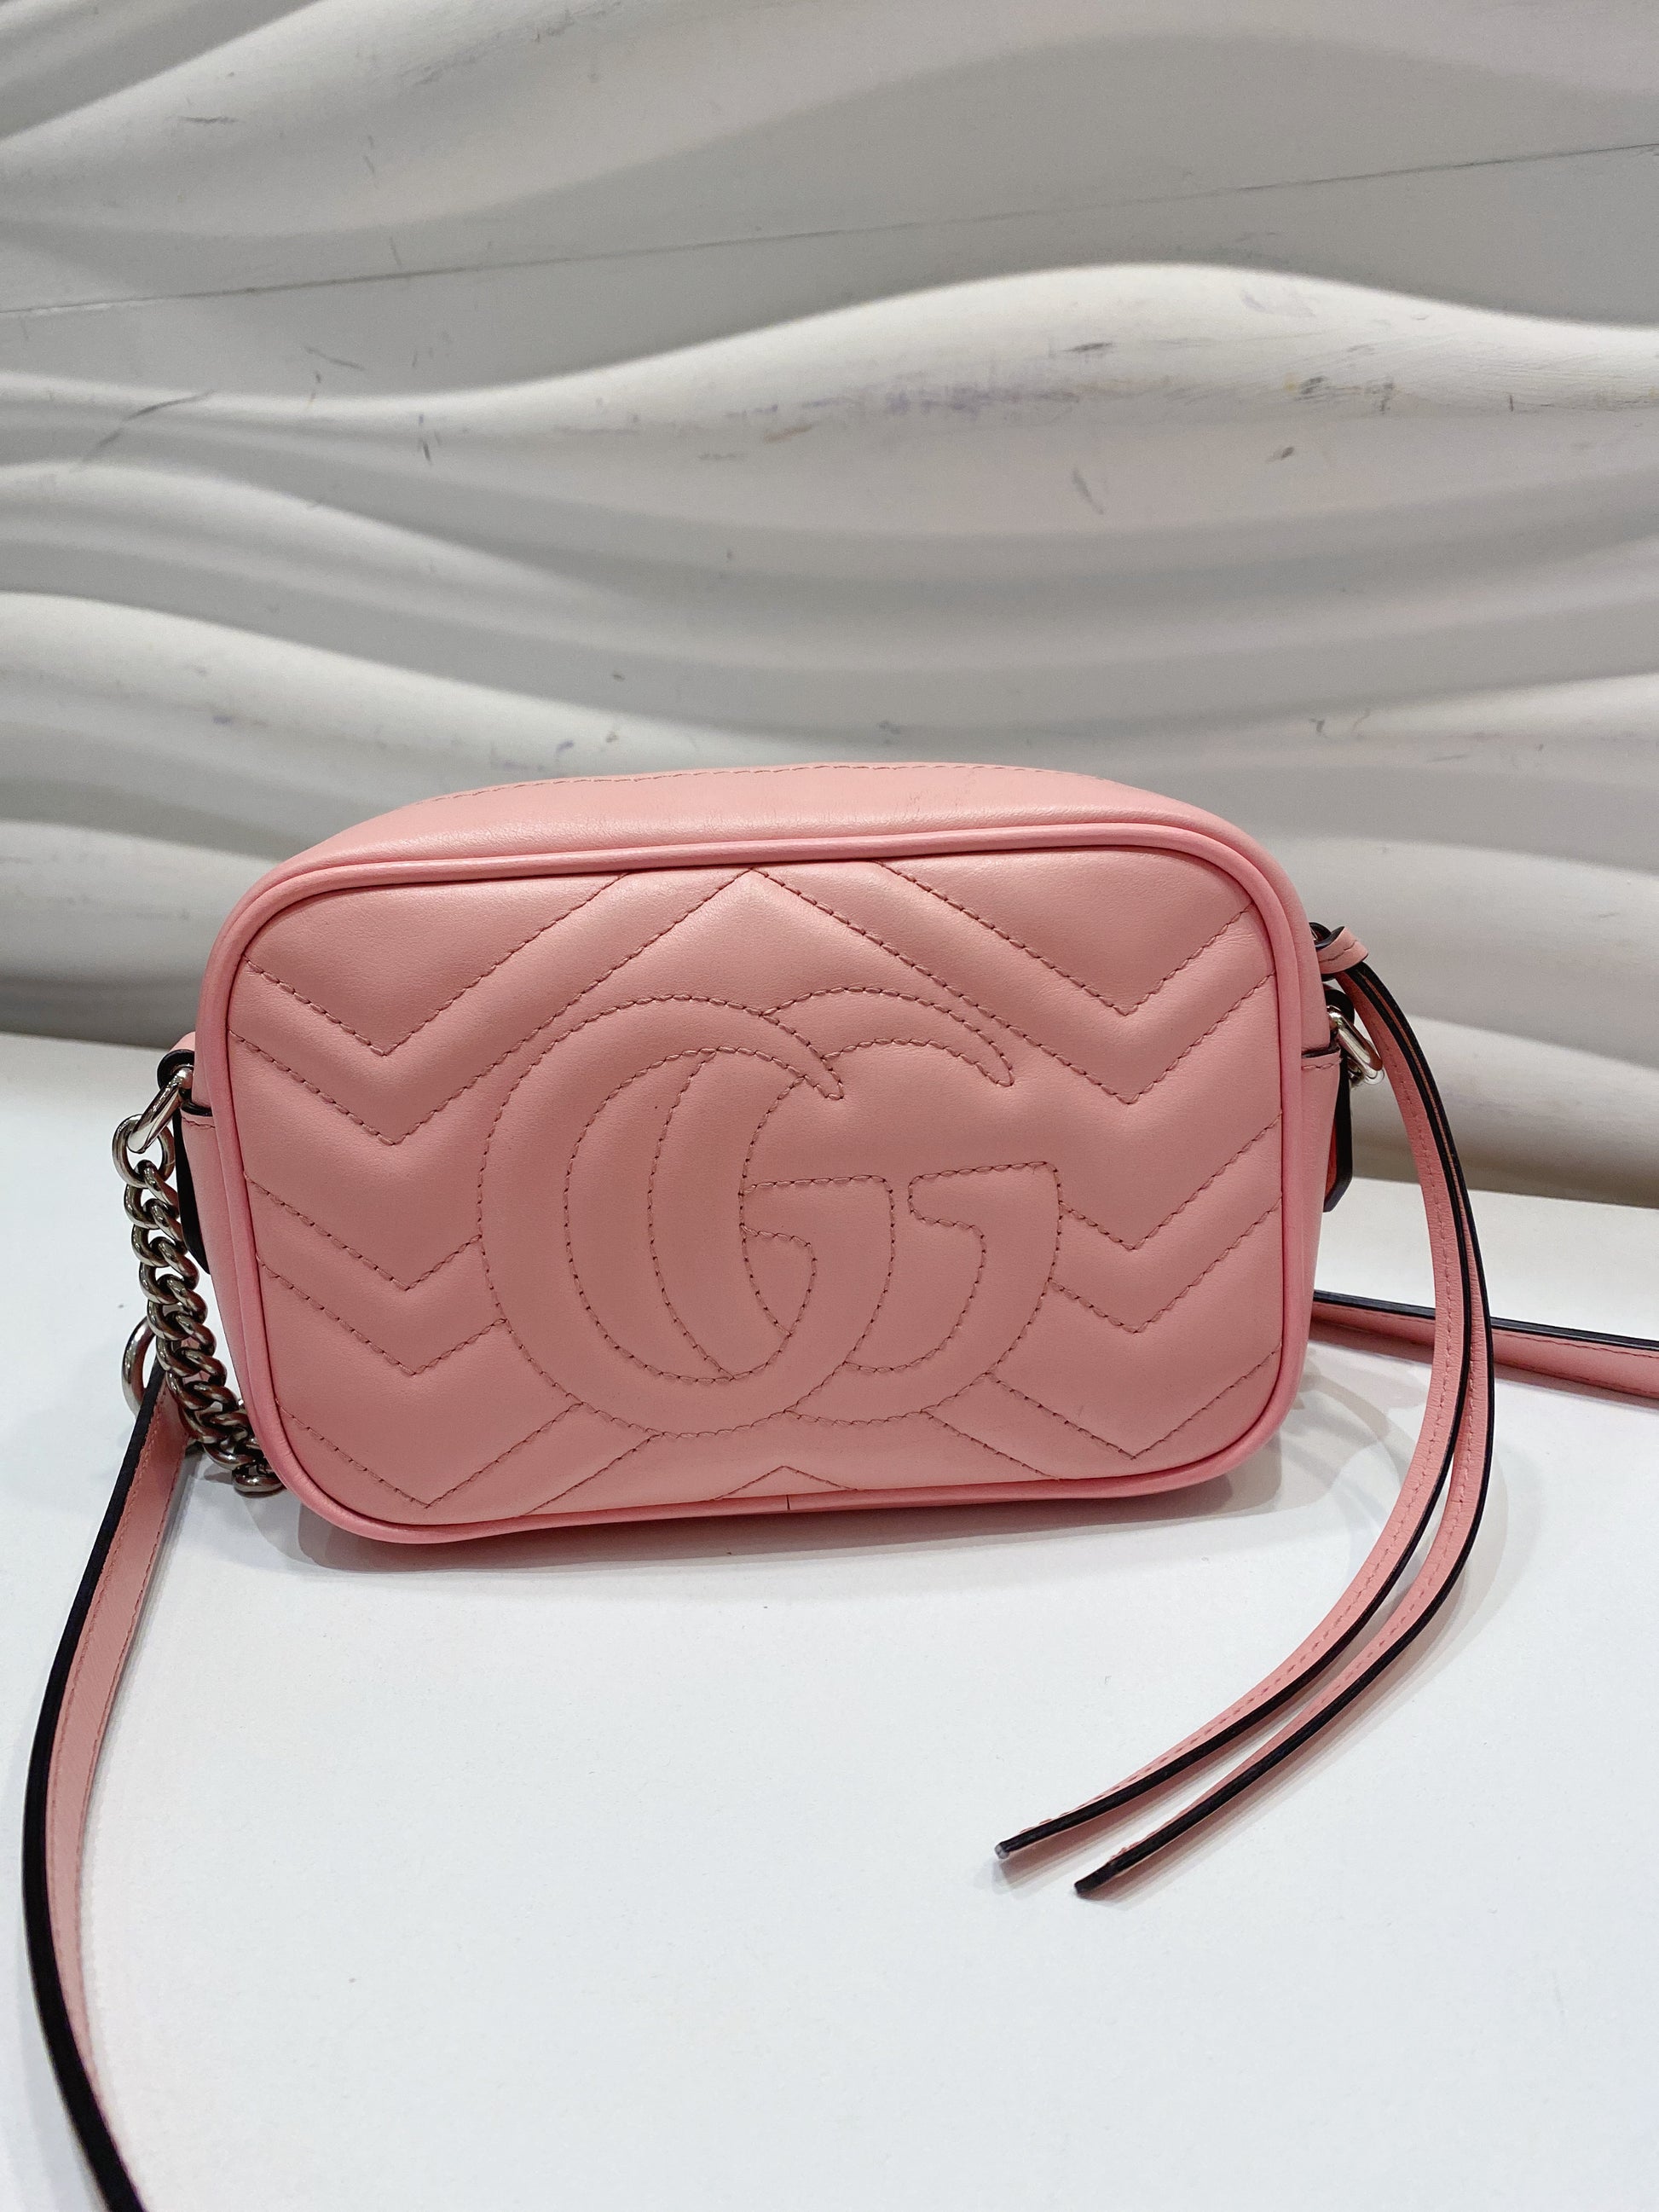 Gucci Calfskin Matelasse Mini GG Marmont Chain Shoulder Bag Wild Rose - luxhub.ca